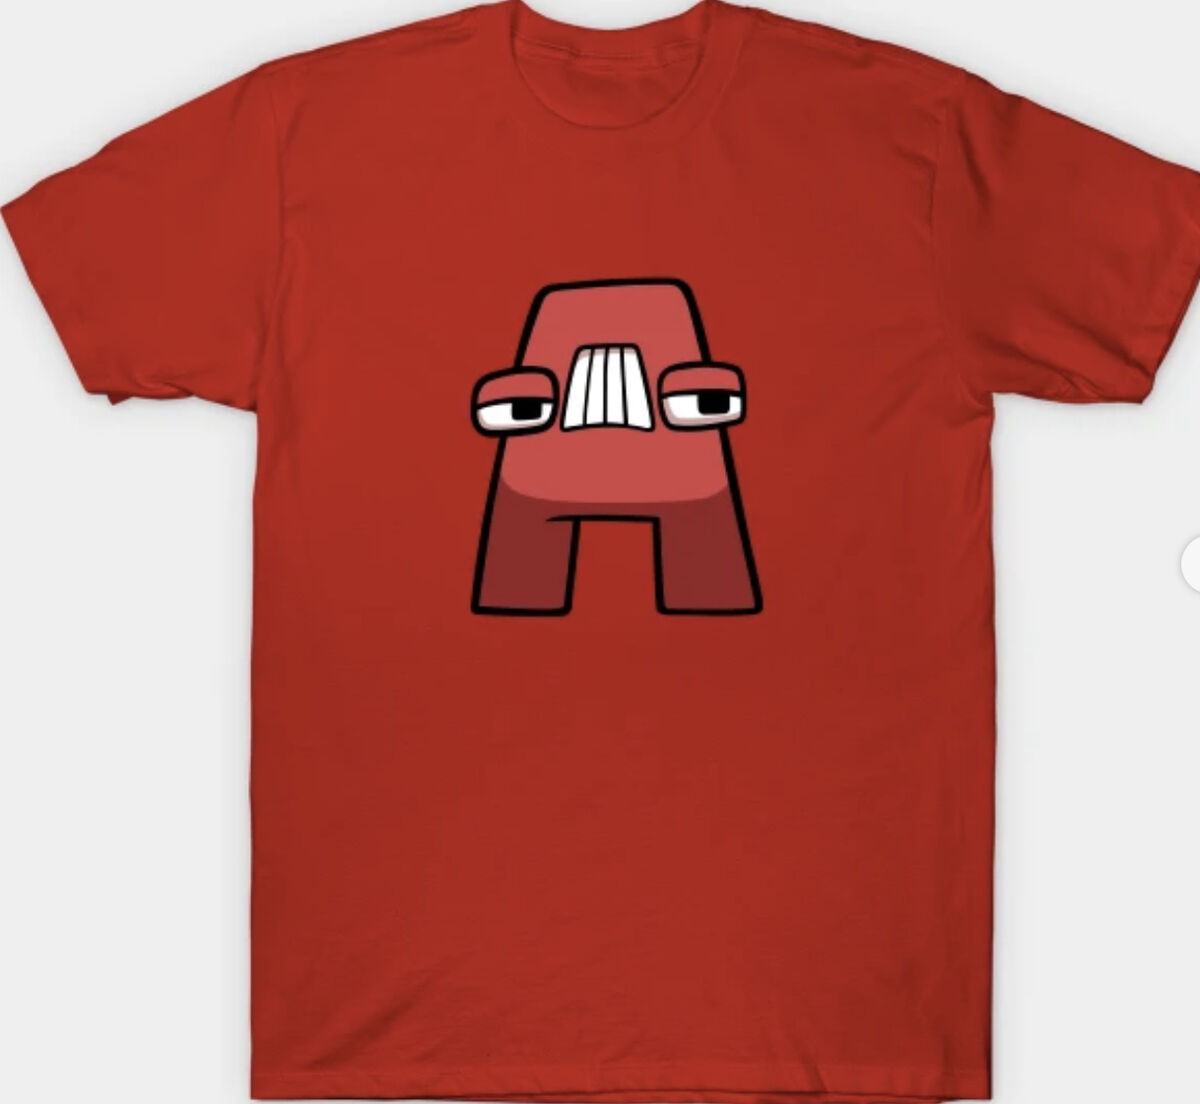 Y, Alphabet Lore - Alphabet Lore - Long Sleeve T-Shirt